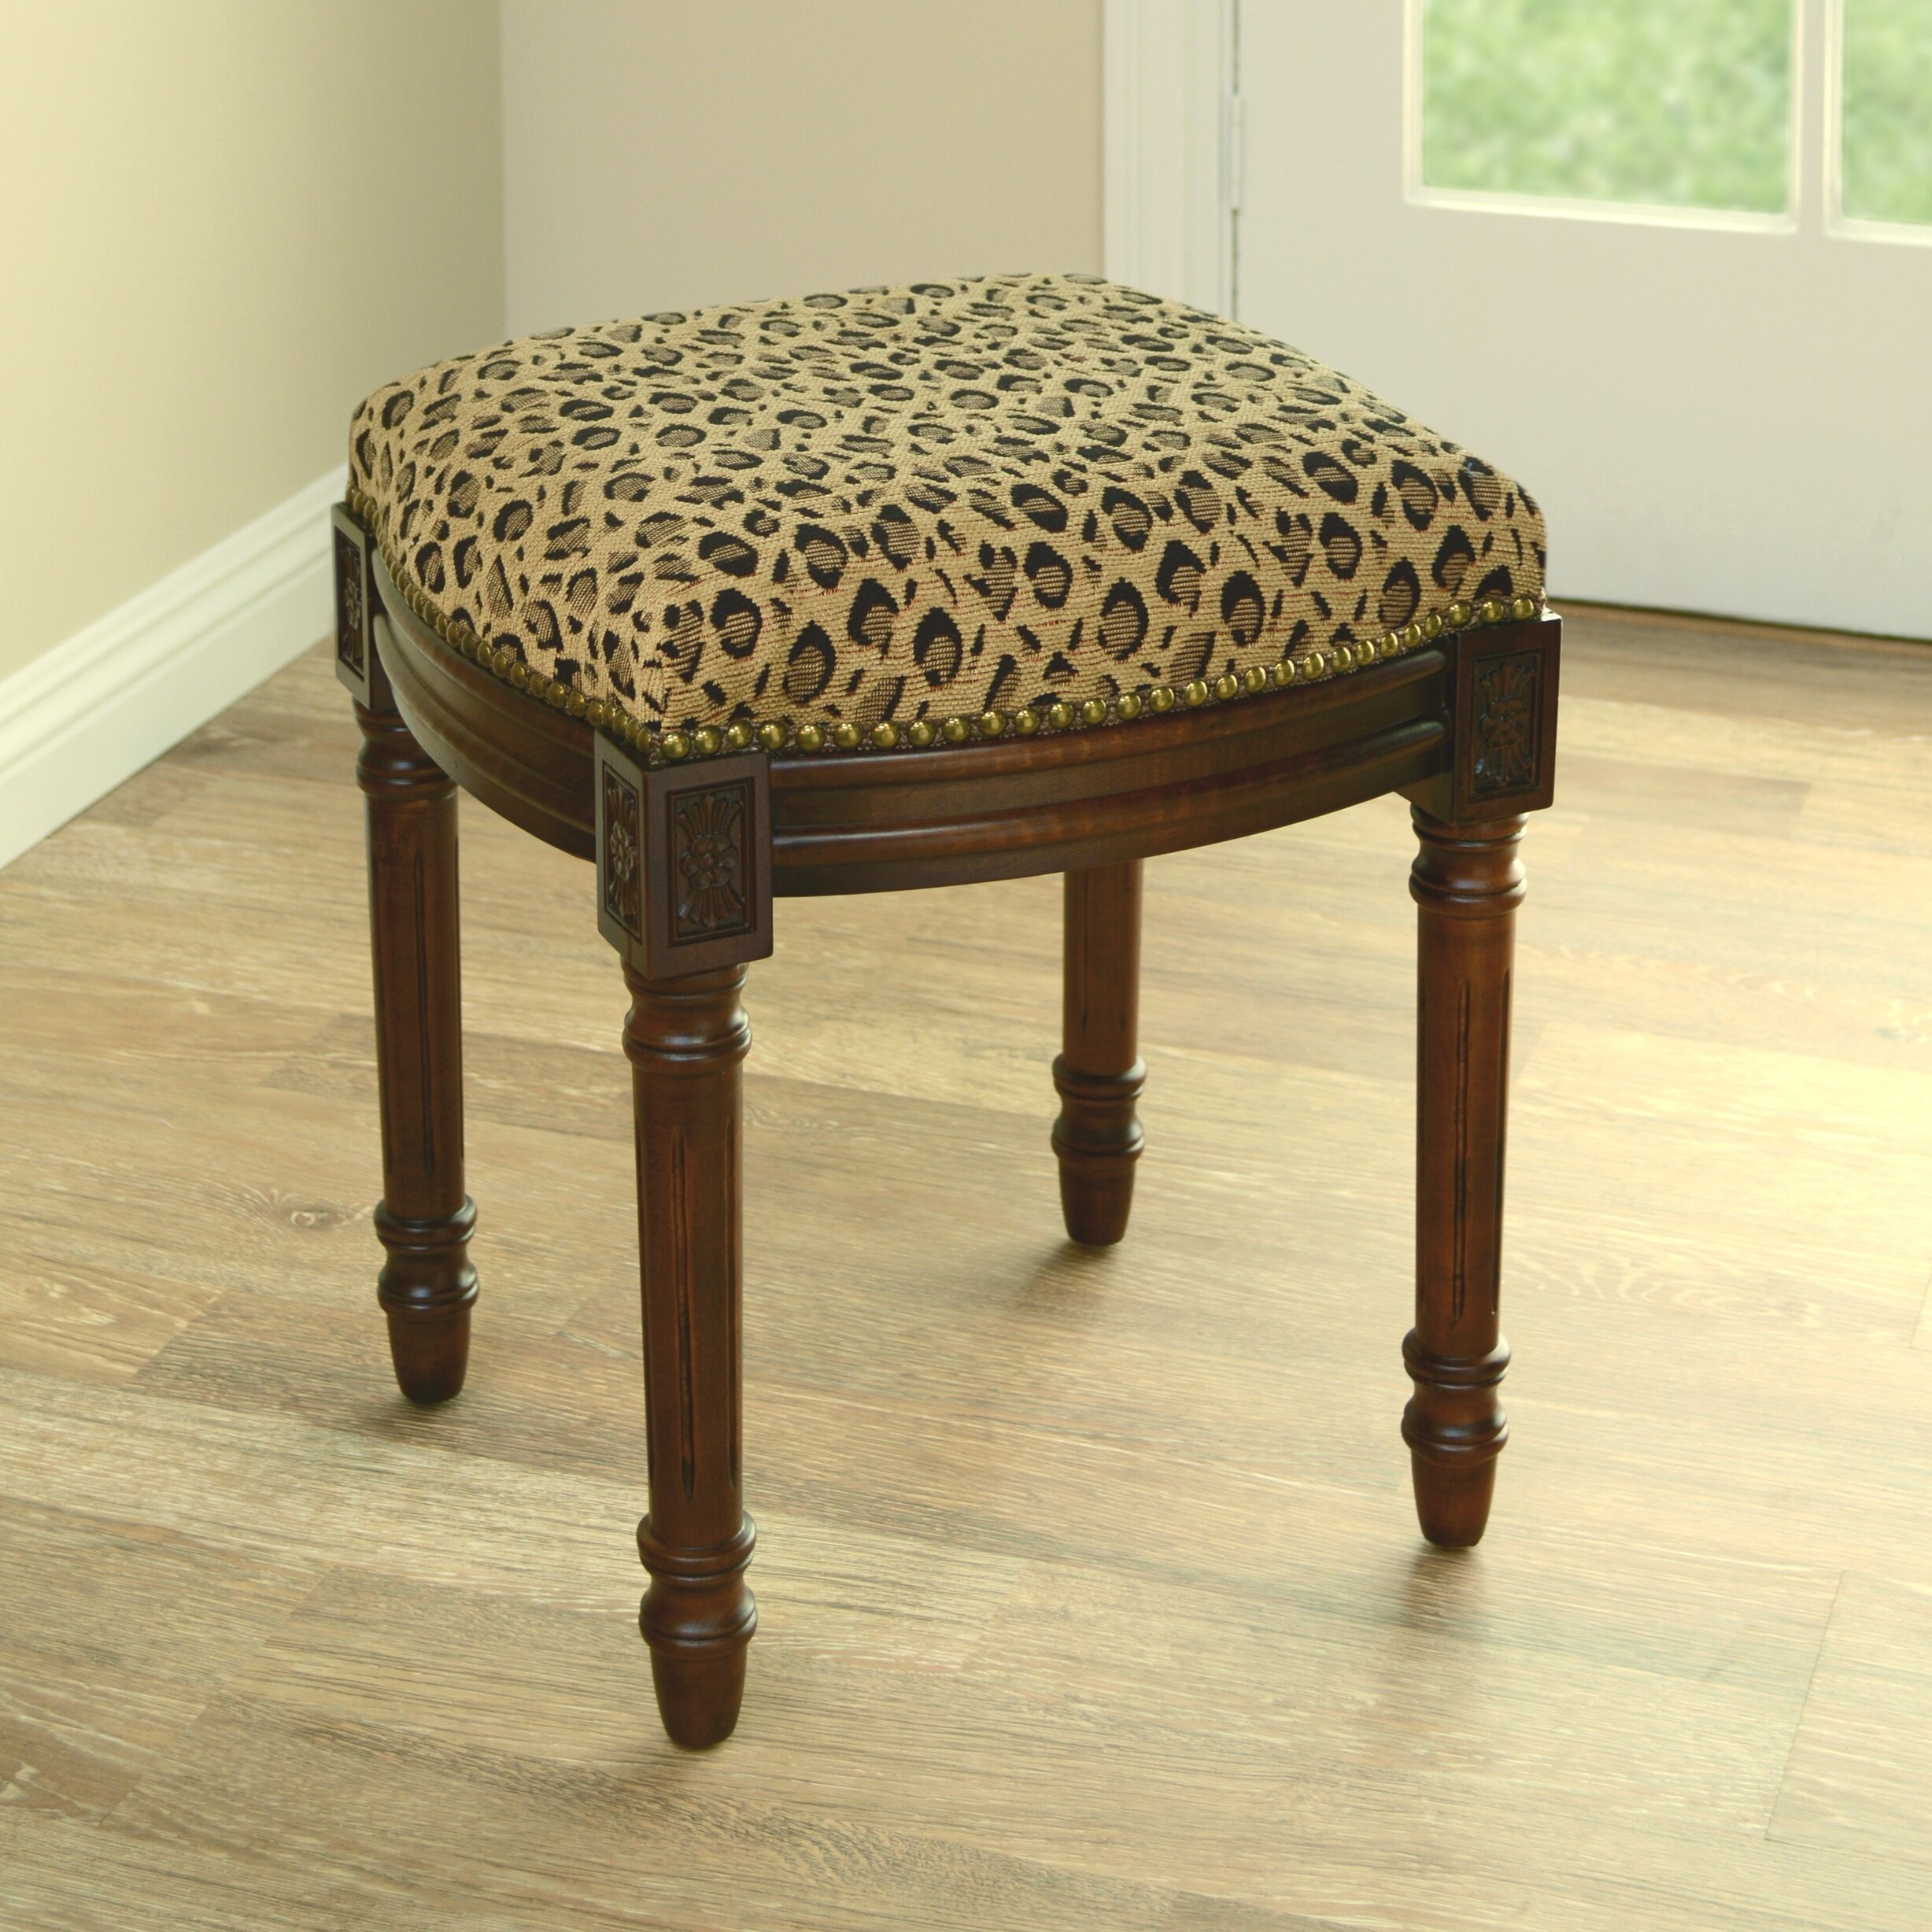 123 creations leopard print upholstered vanity stool